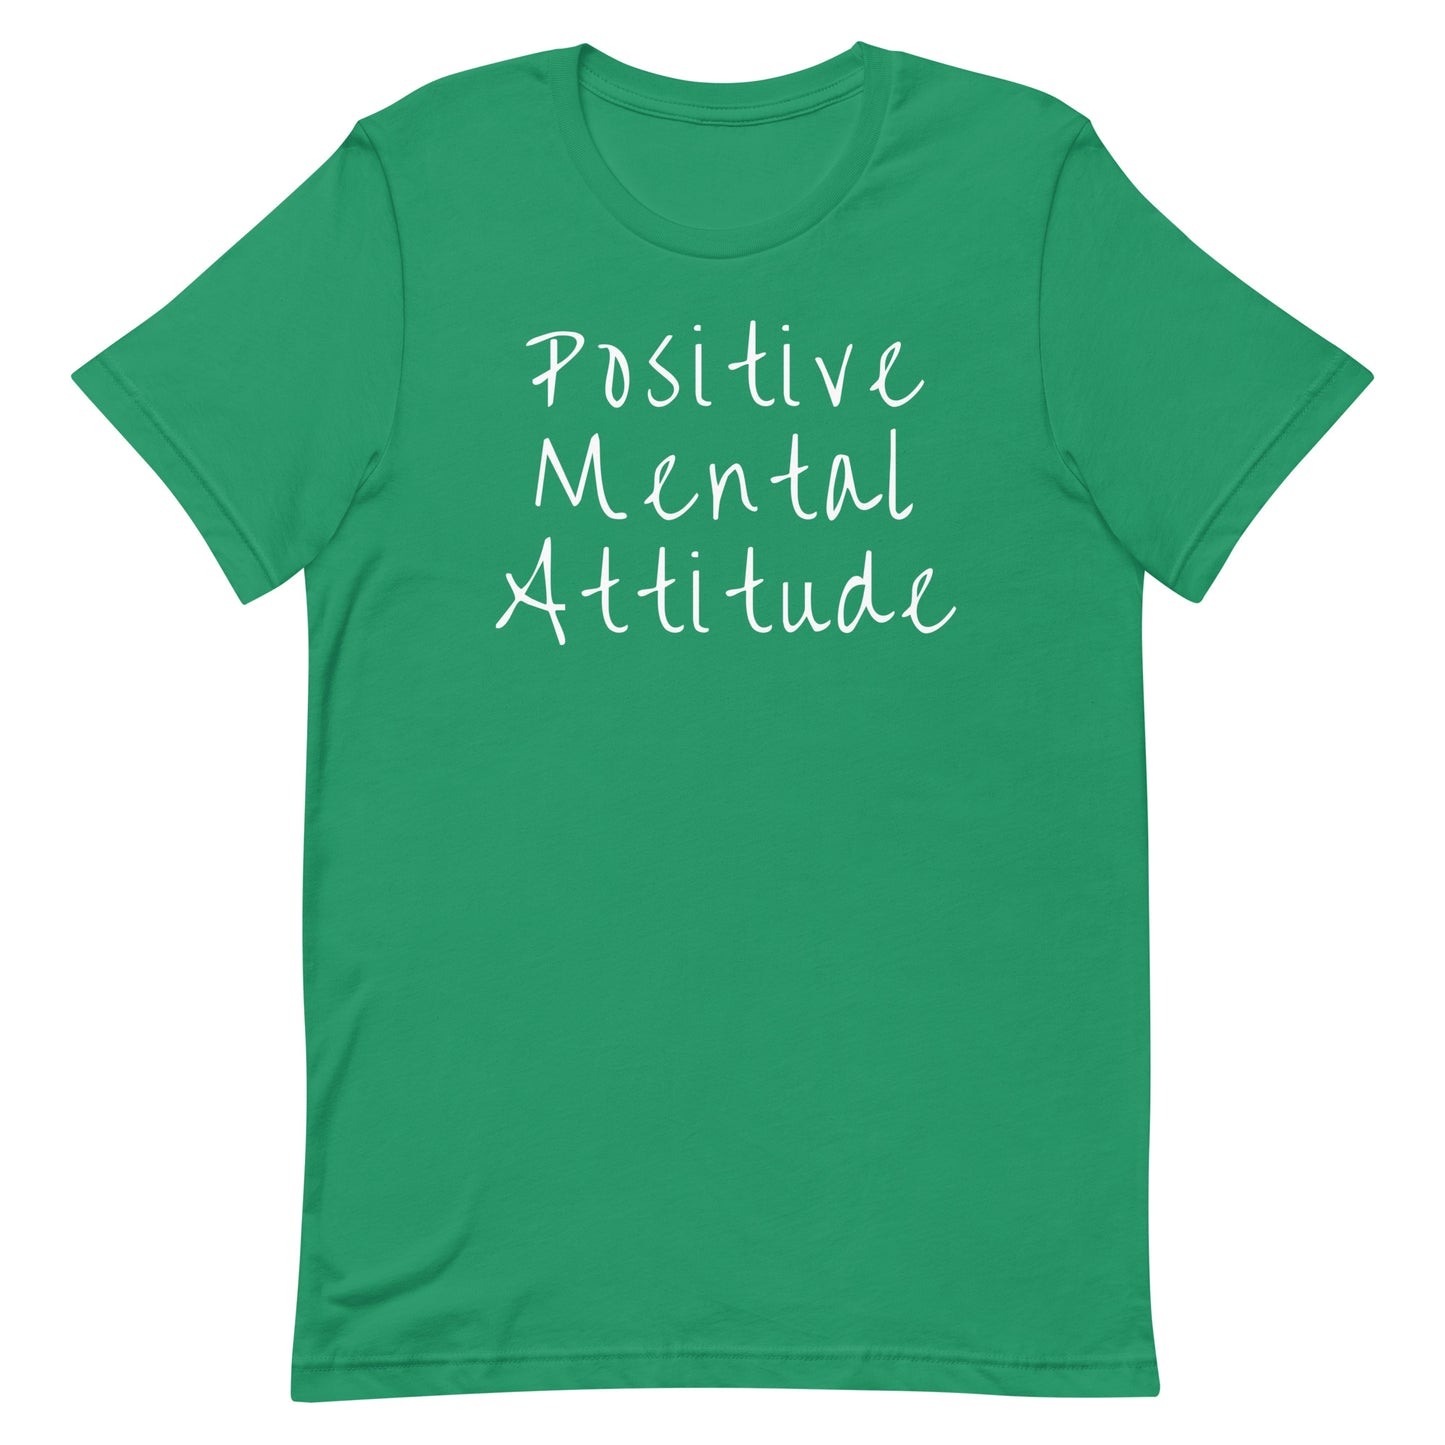 Positive Mental Attitude. Unisex t-shirt